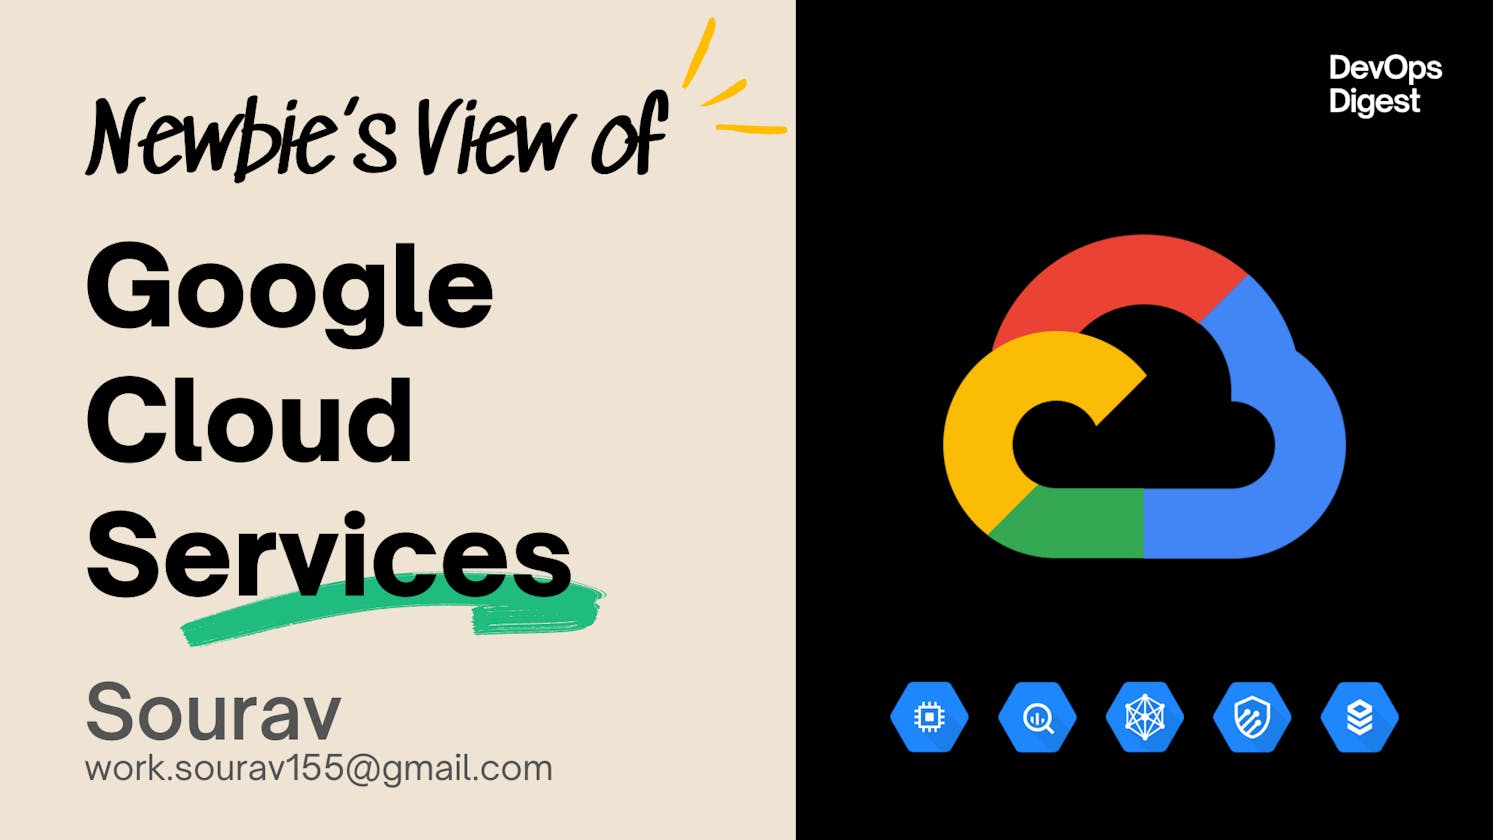 Newbie's View of Google Cloud Services